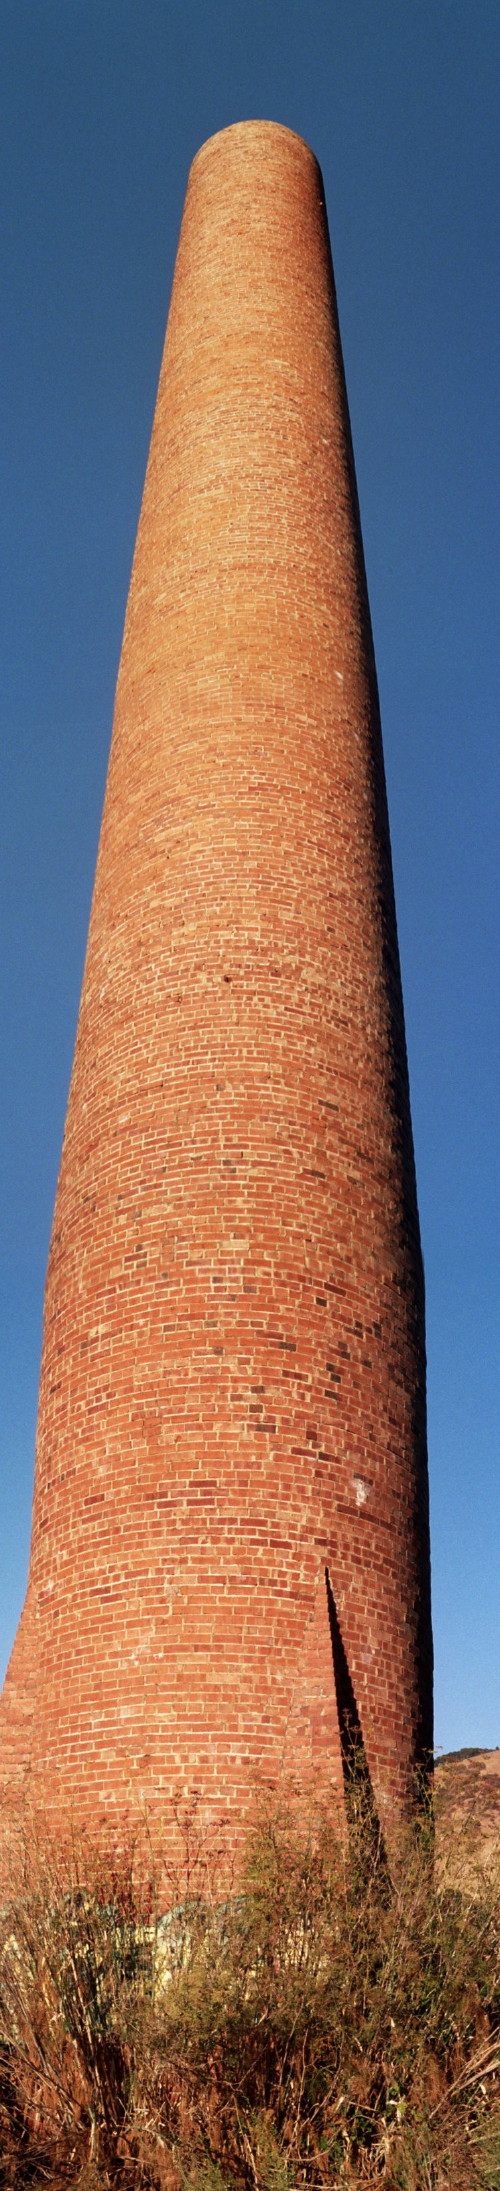 chimney2_1.jpg